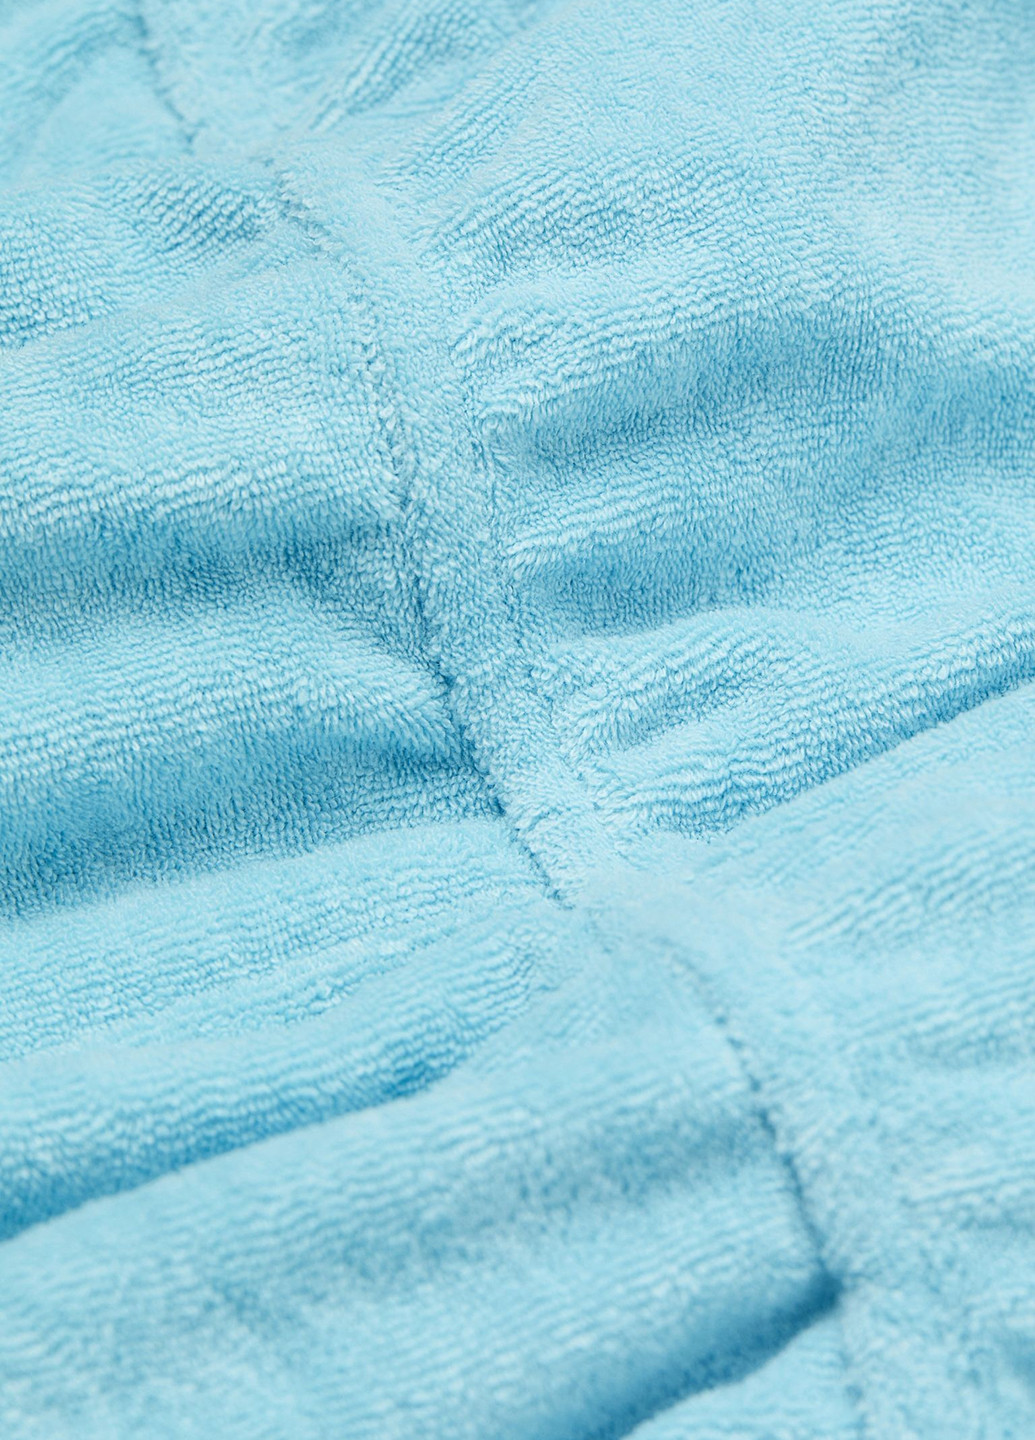 Комбинезон H&M комбинезон-шорты однотонный голубой кэжуал полиэстер, махра